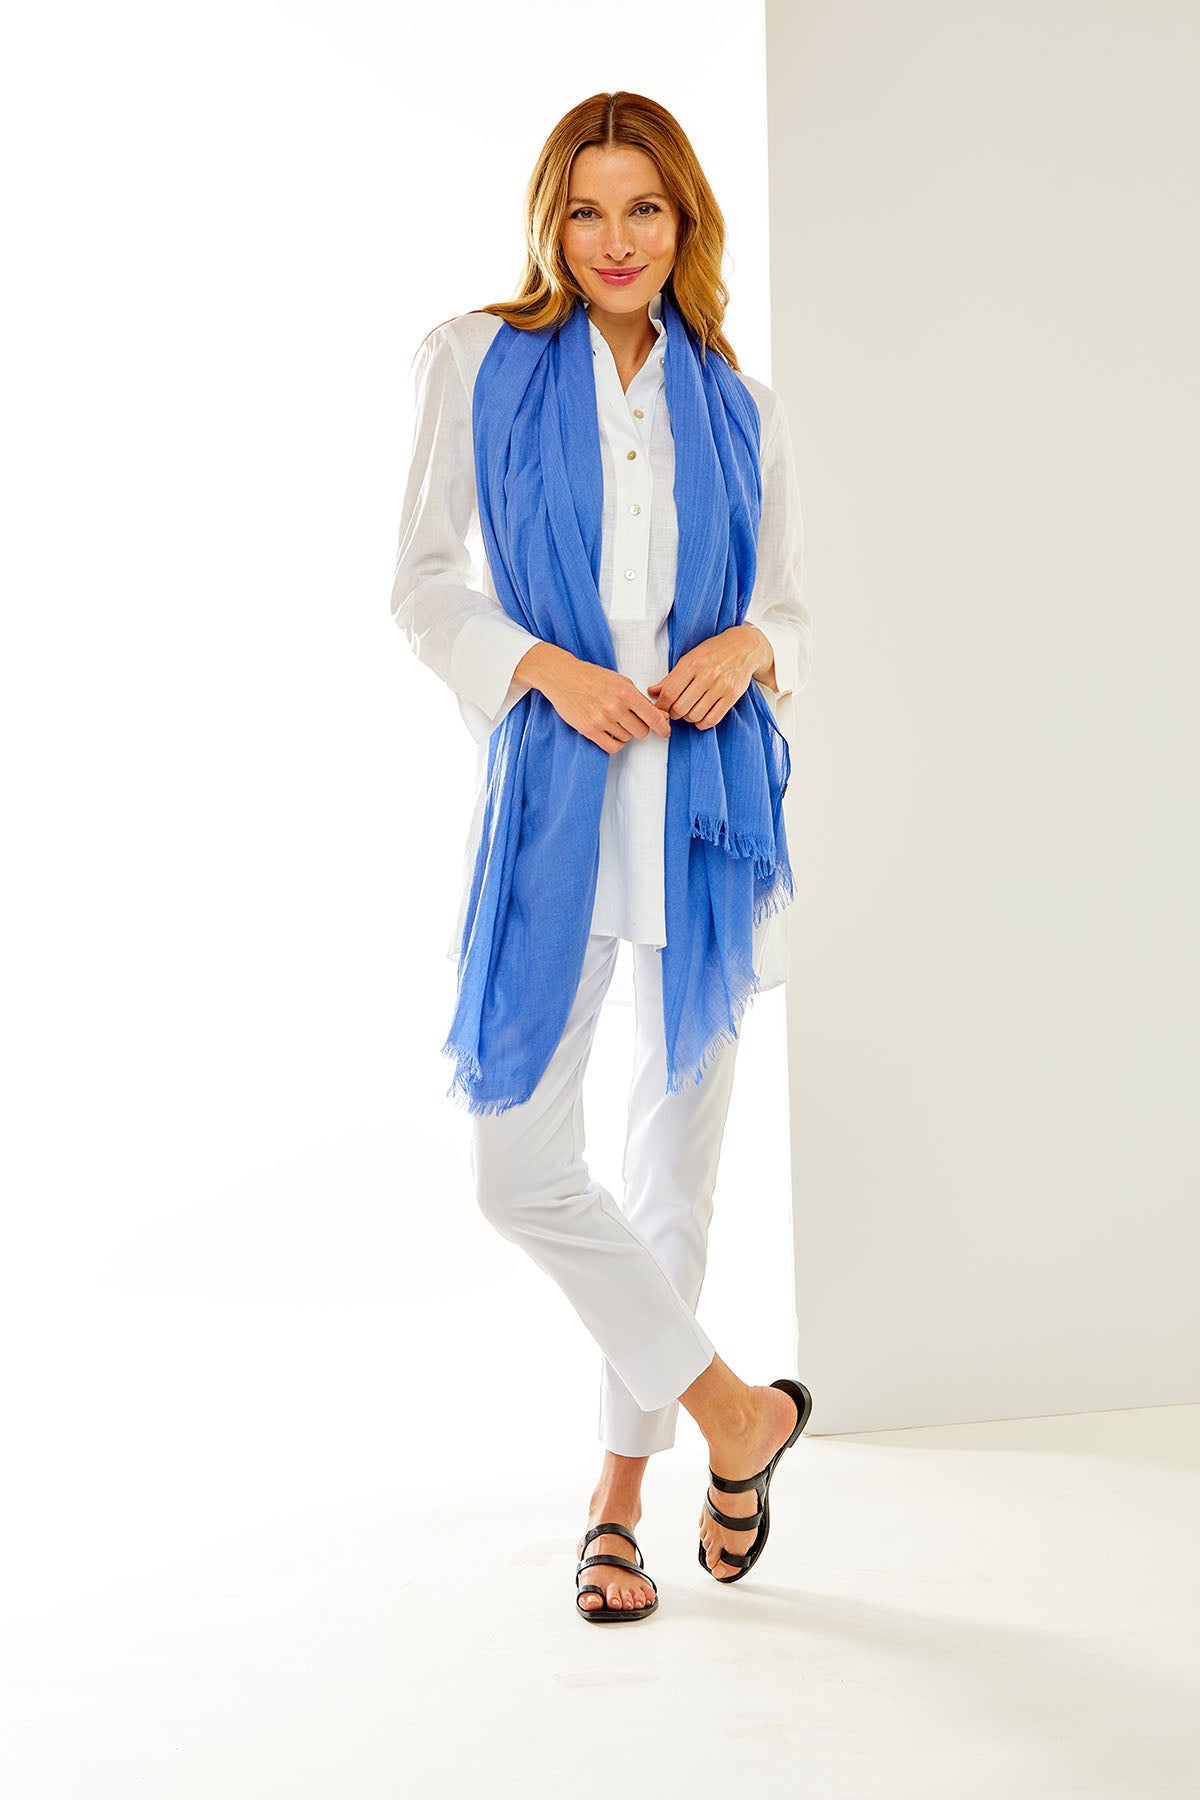 Woman in blue scarf